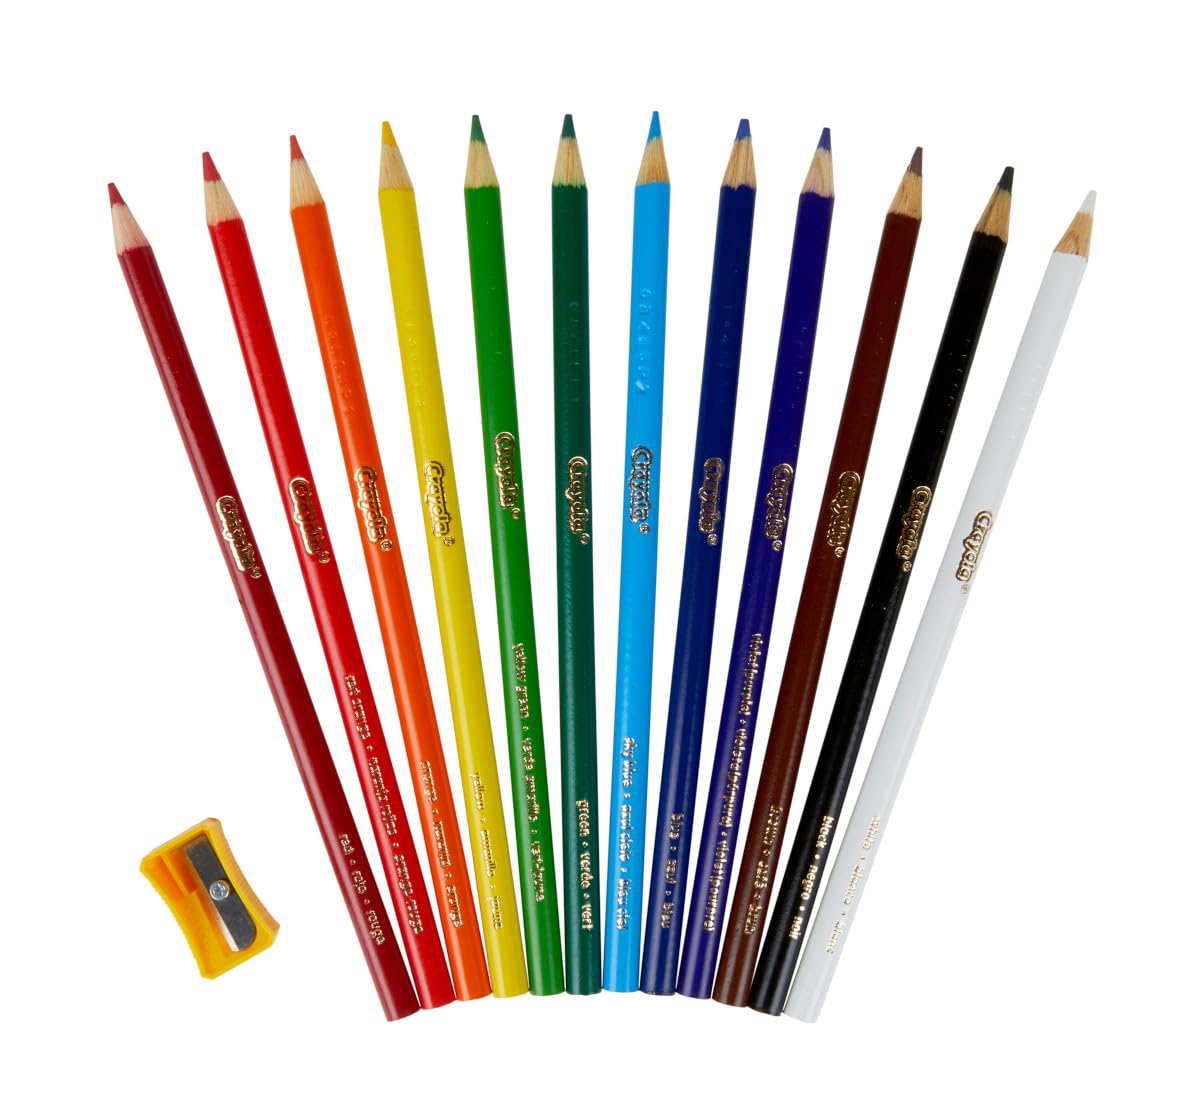 Crayola Colored Pencils Classpack (240 Ct), Bulk Classroom Supplies, Colored Pencils for School, 12 Assorted Colors, Nontoxic